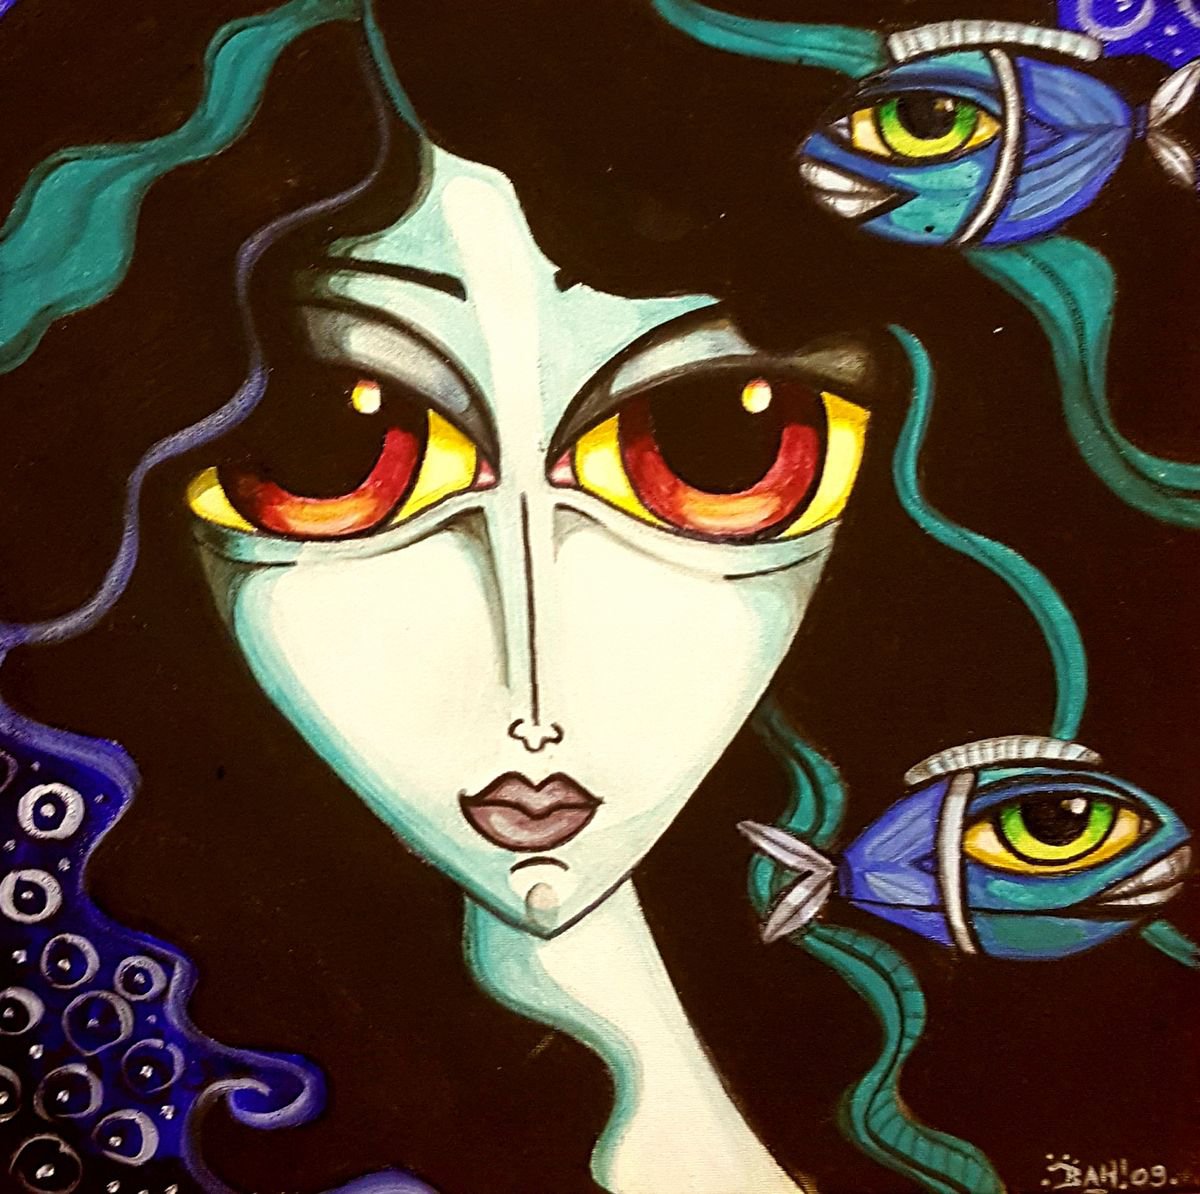 Indigo Mermaid by Alexia Bahar Karabenli Yilmaz